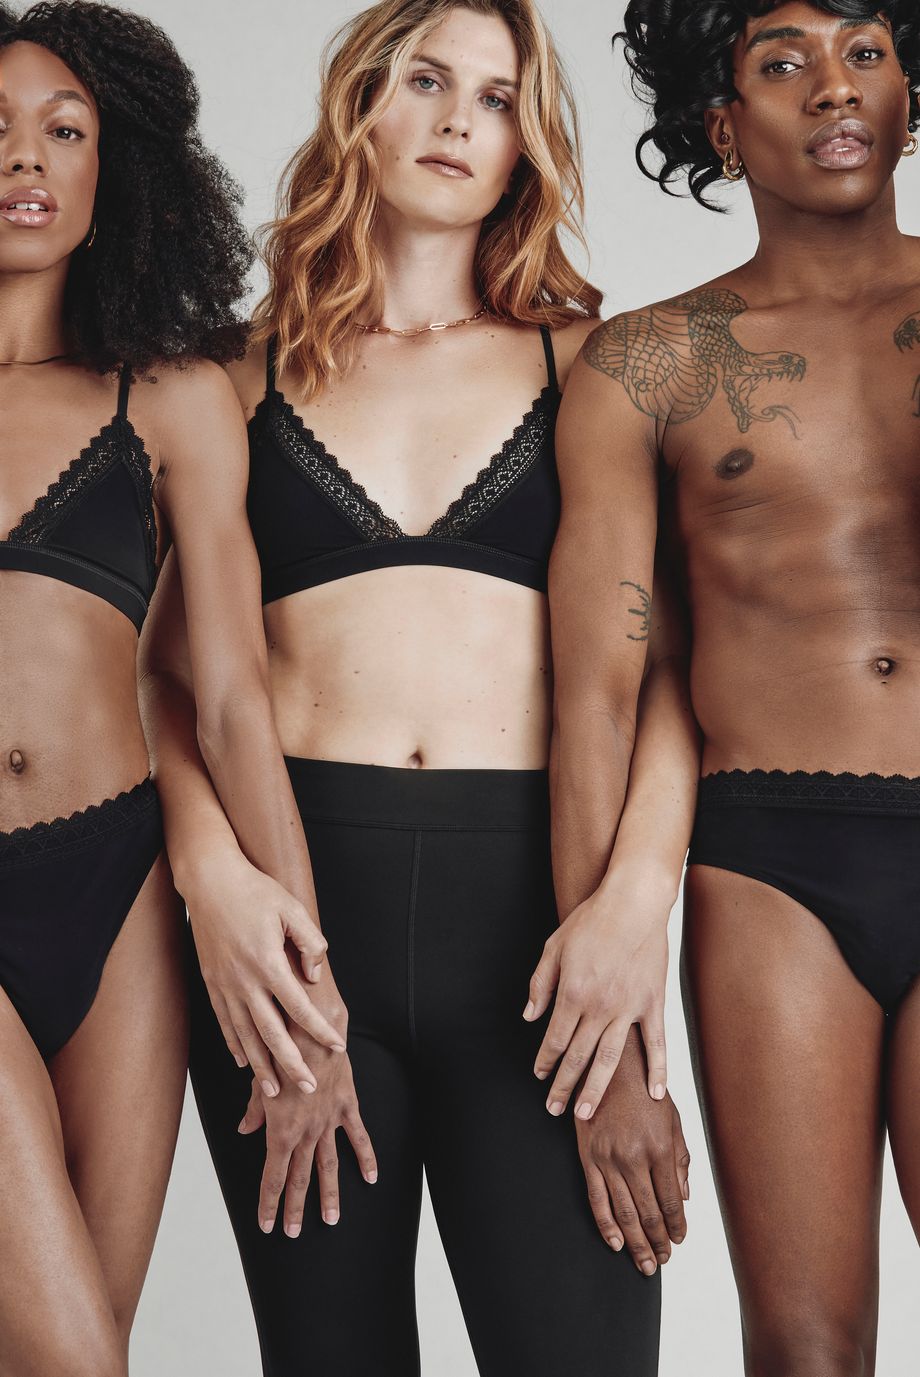 Can men wear women's lingerie? – Postgenderific